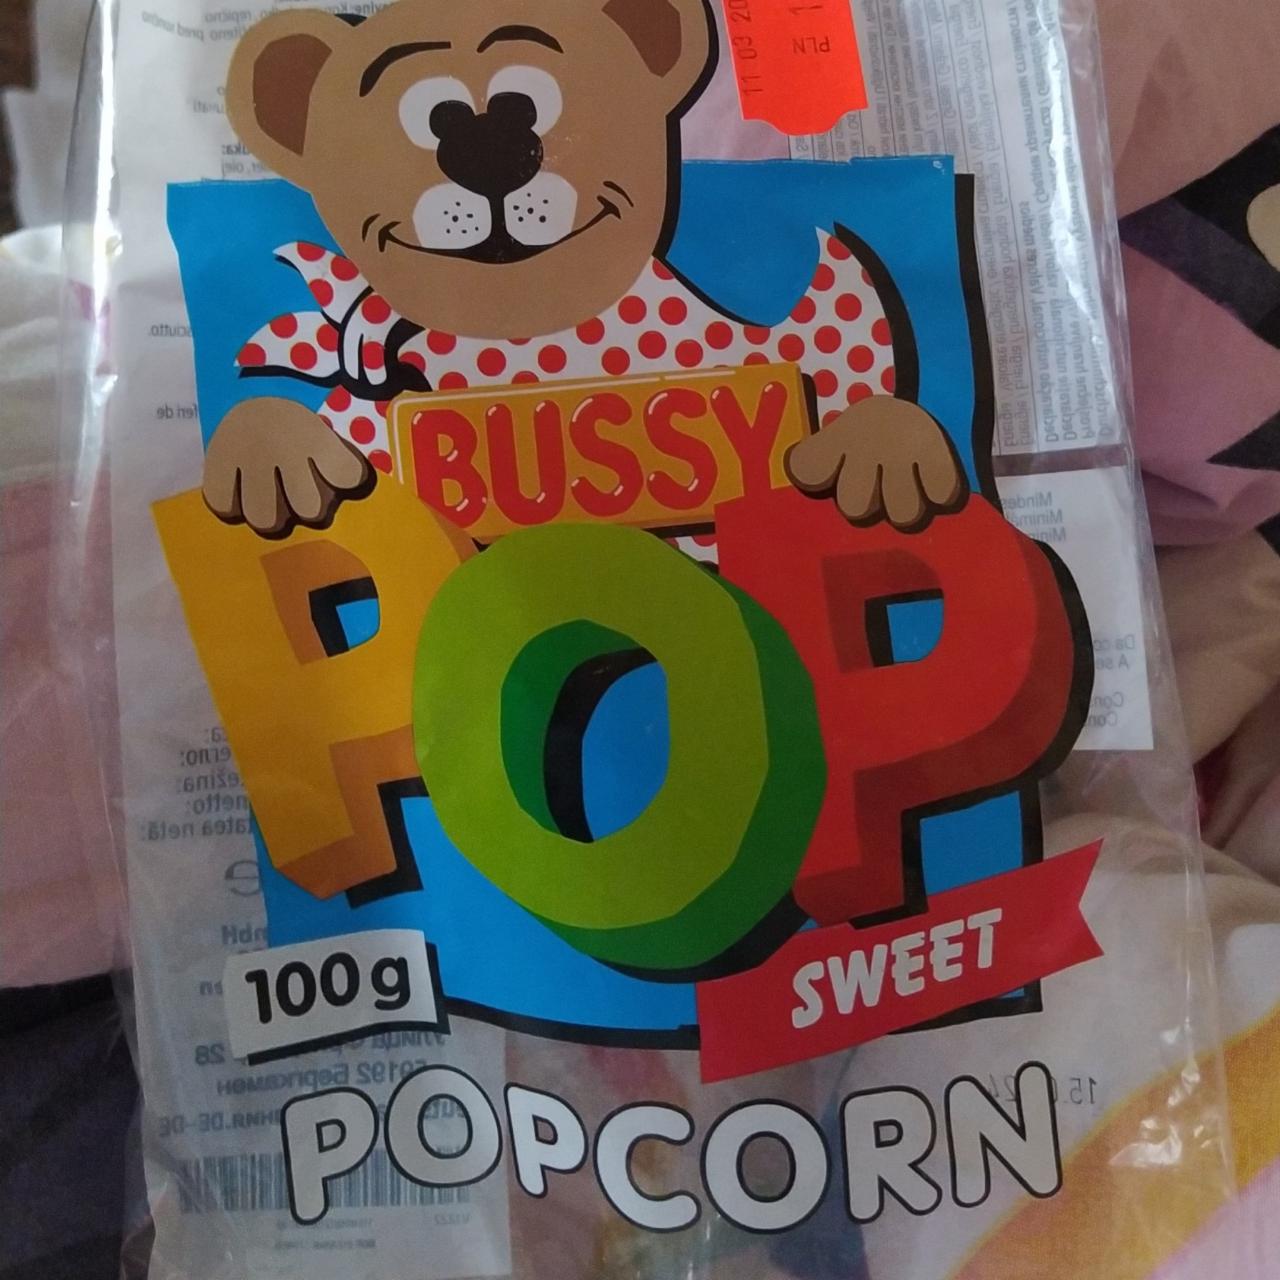 Zdjęcia - Sweet popcorn Bussy pop